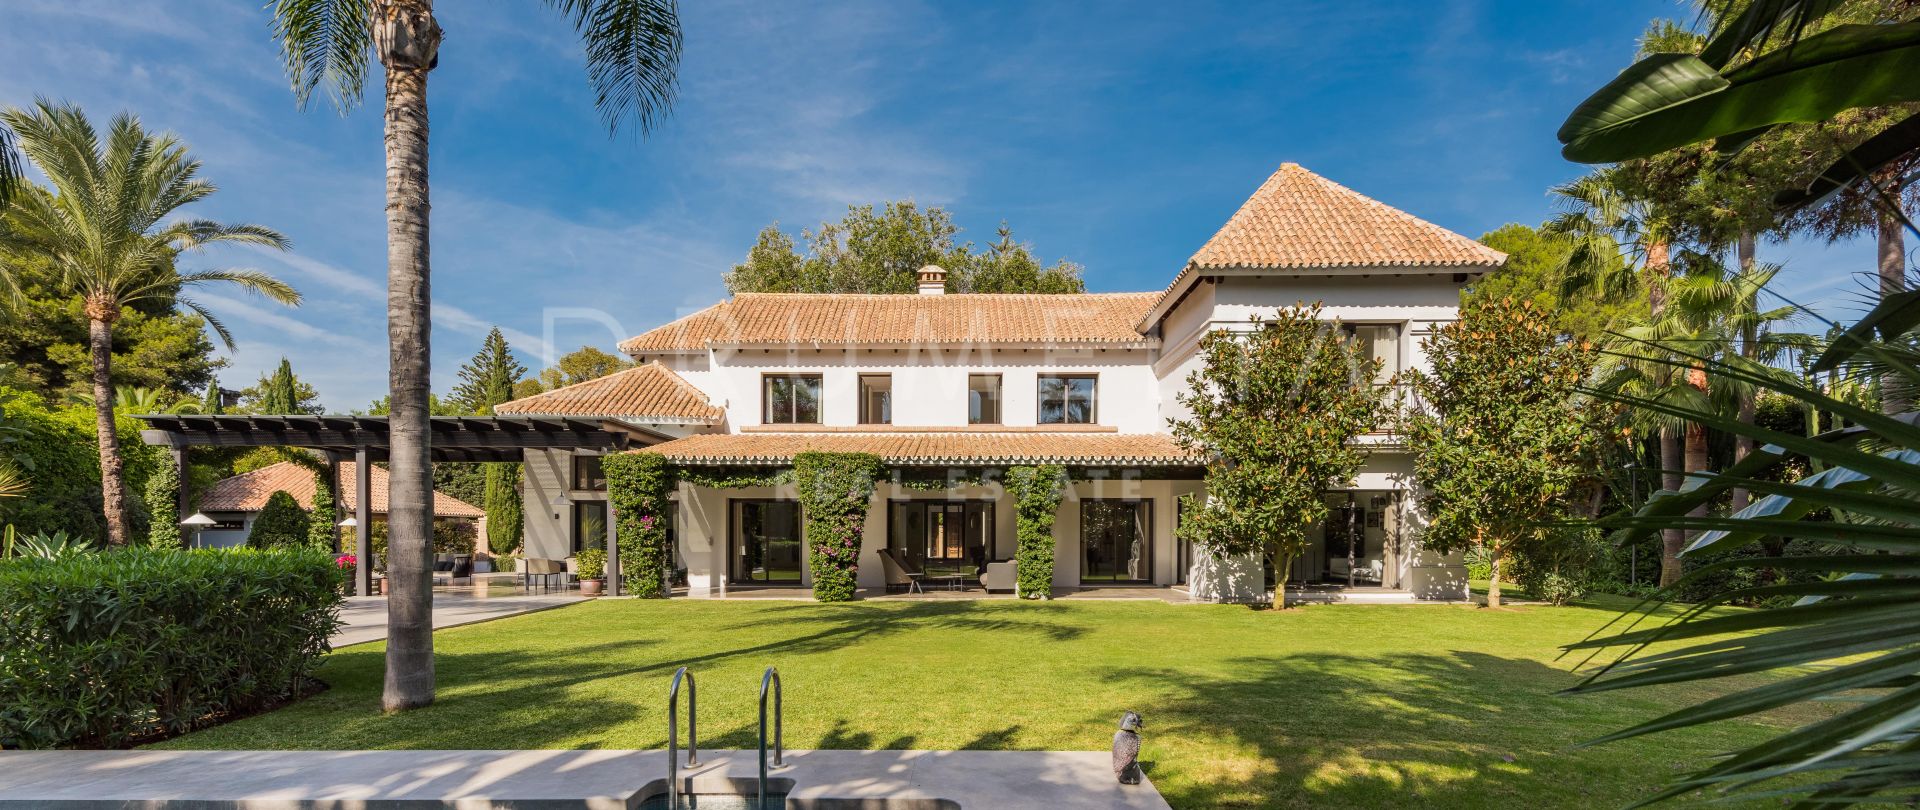 Merveilleuse villa méditerranéenne moderne, Las Mimosas, Puerto Banus, Marbella.